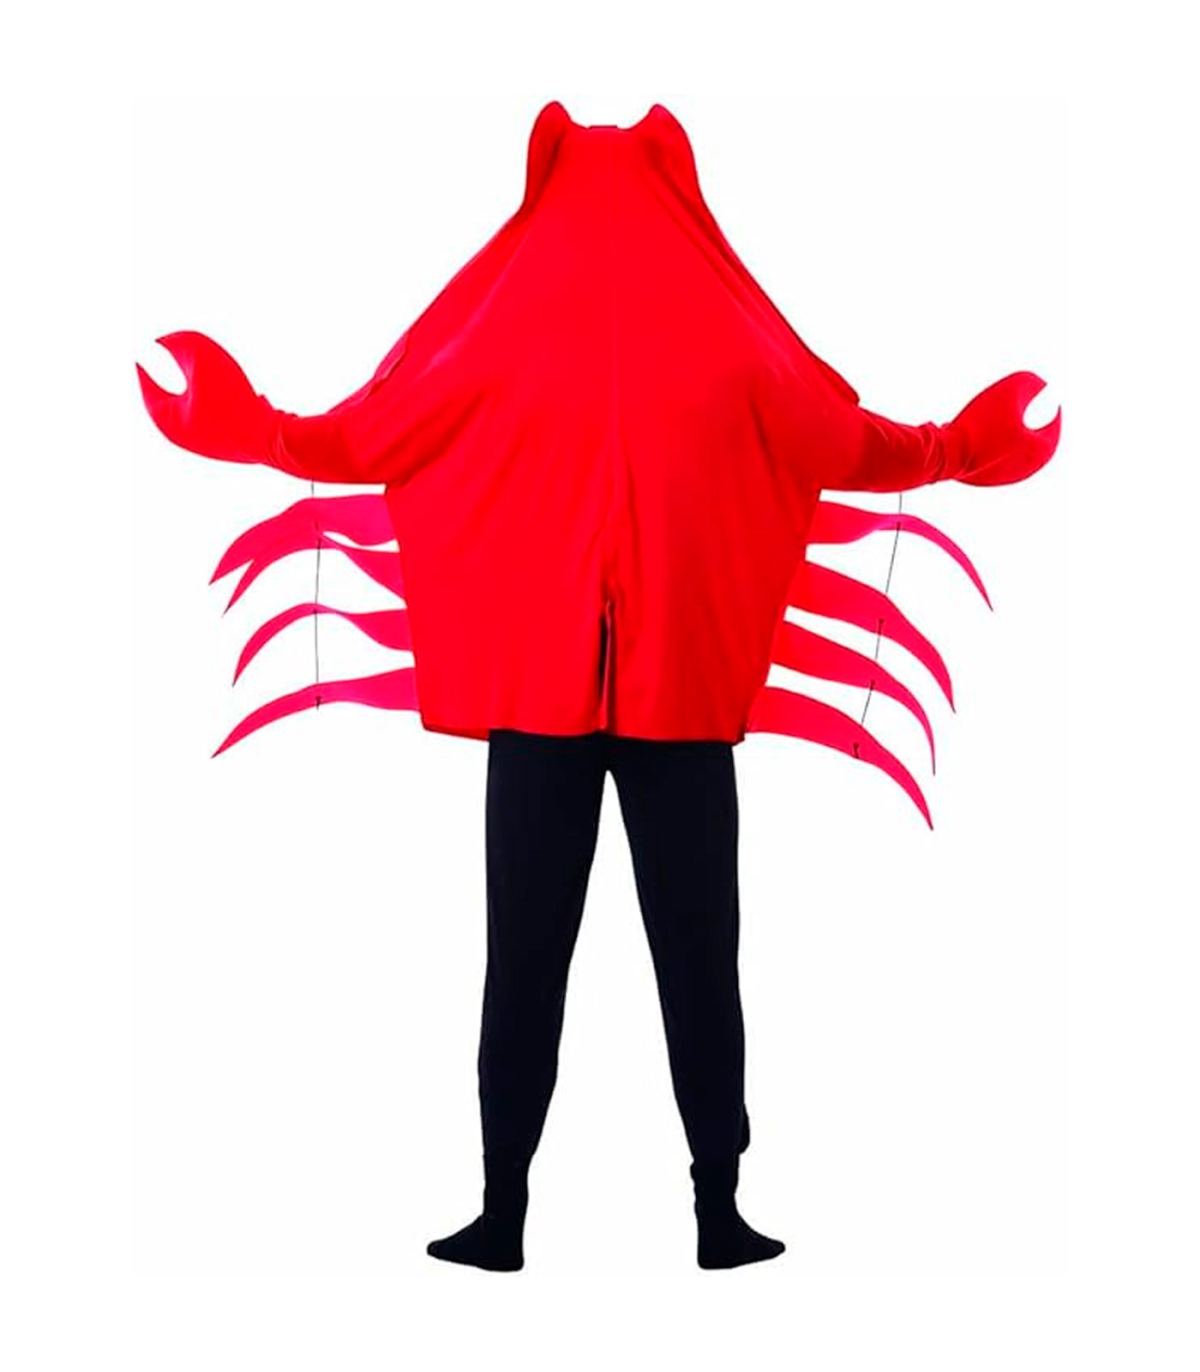 Tradineur - Disfraz de cangrejo rojo para adulto, poliéster